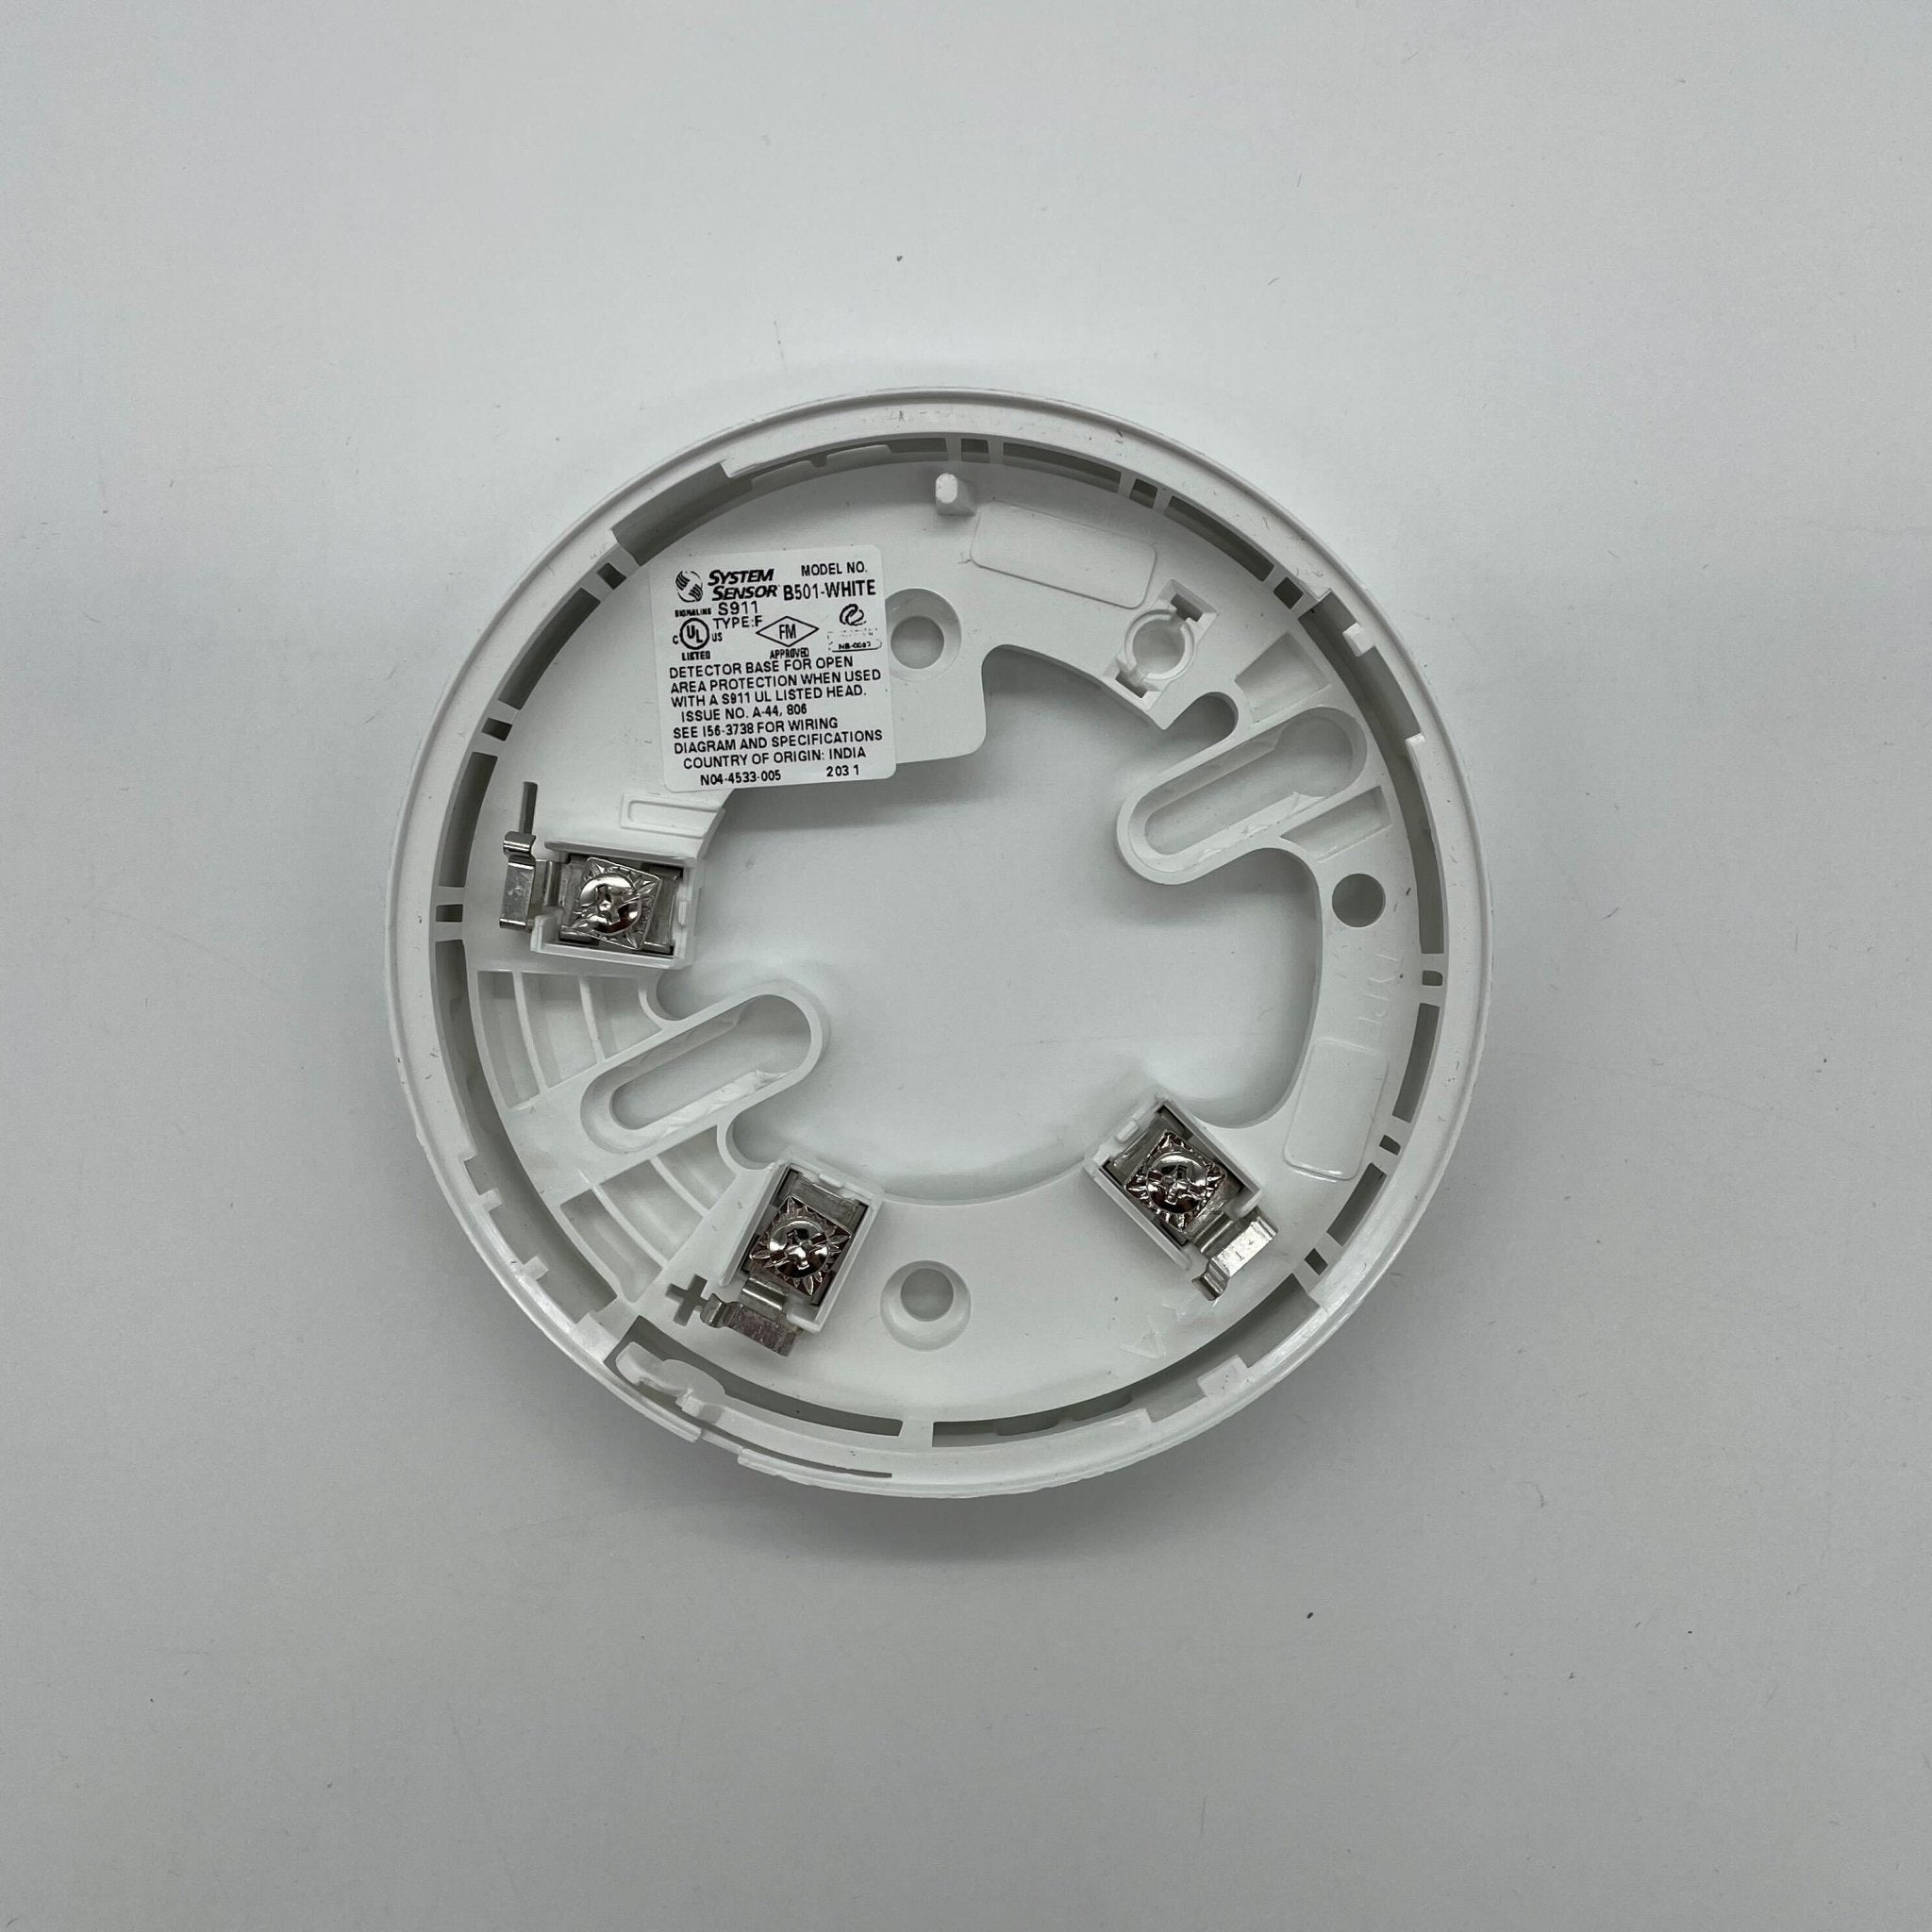 System Sensor B501-WHITE - The Fire Alarm Supplier